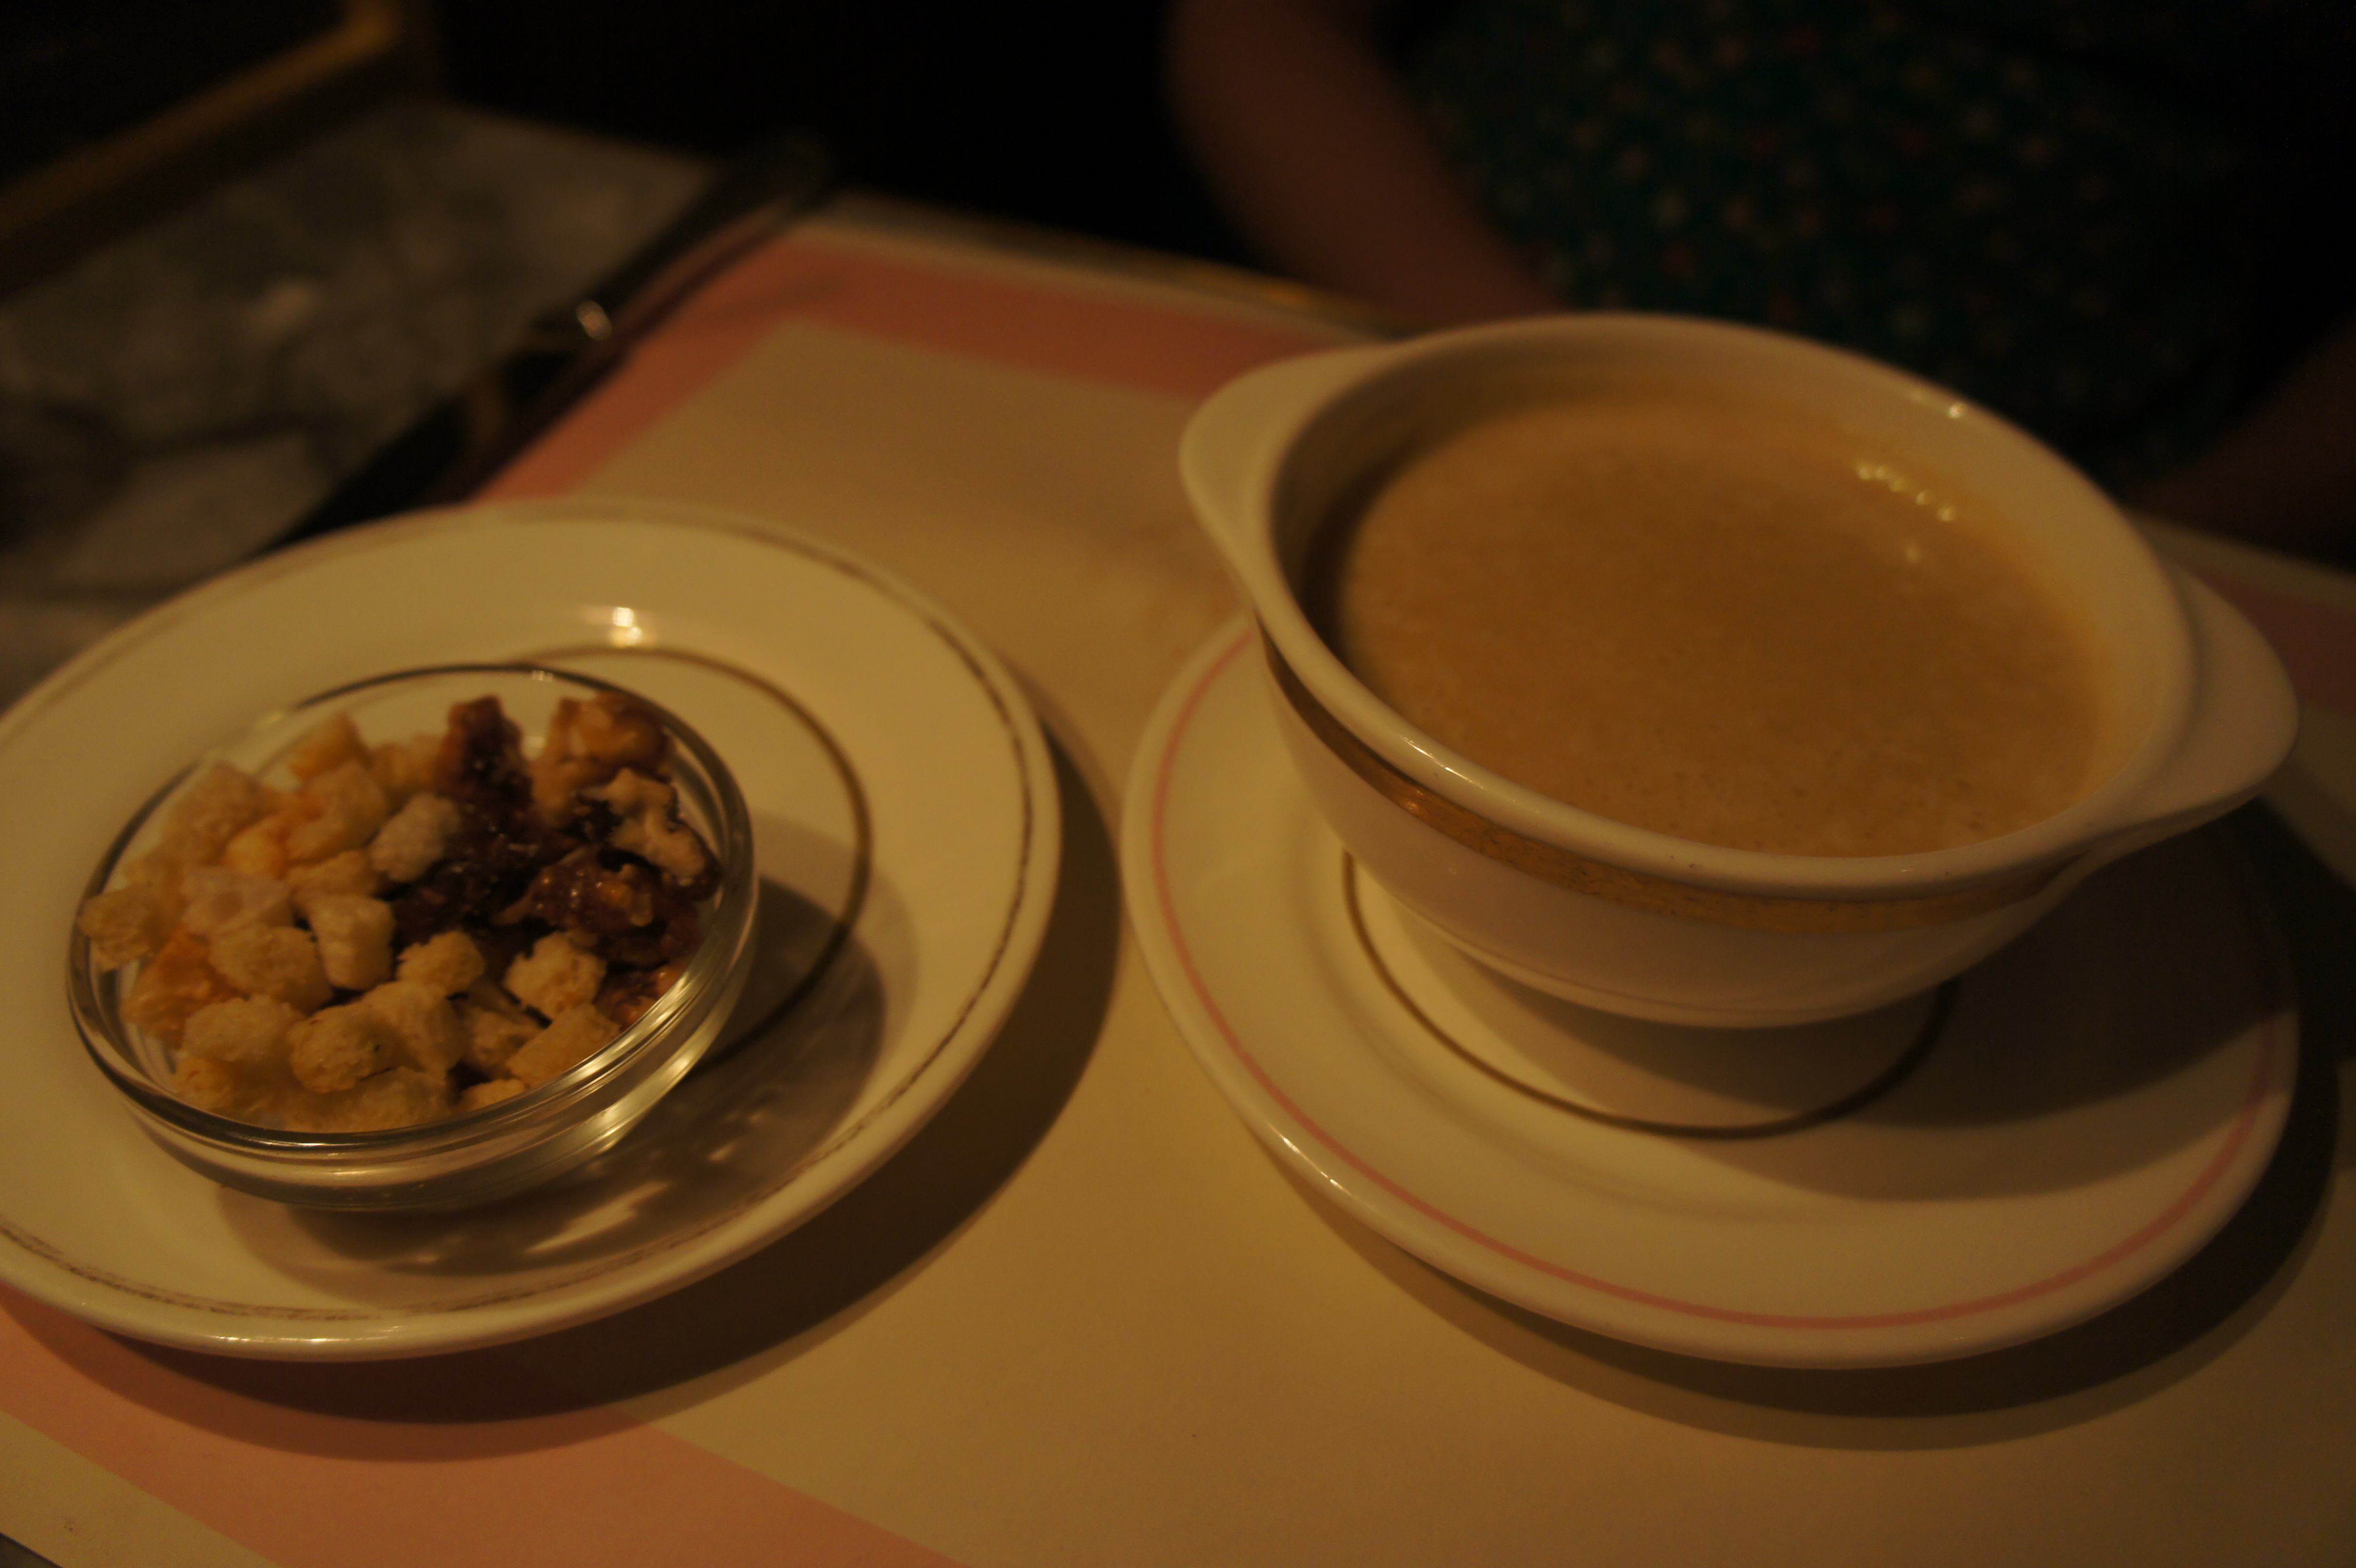 Jerusalem Artichoke Dip with Caramelized Walnuts and Brioche Croutons